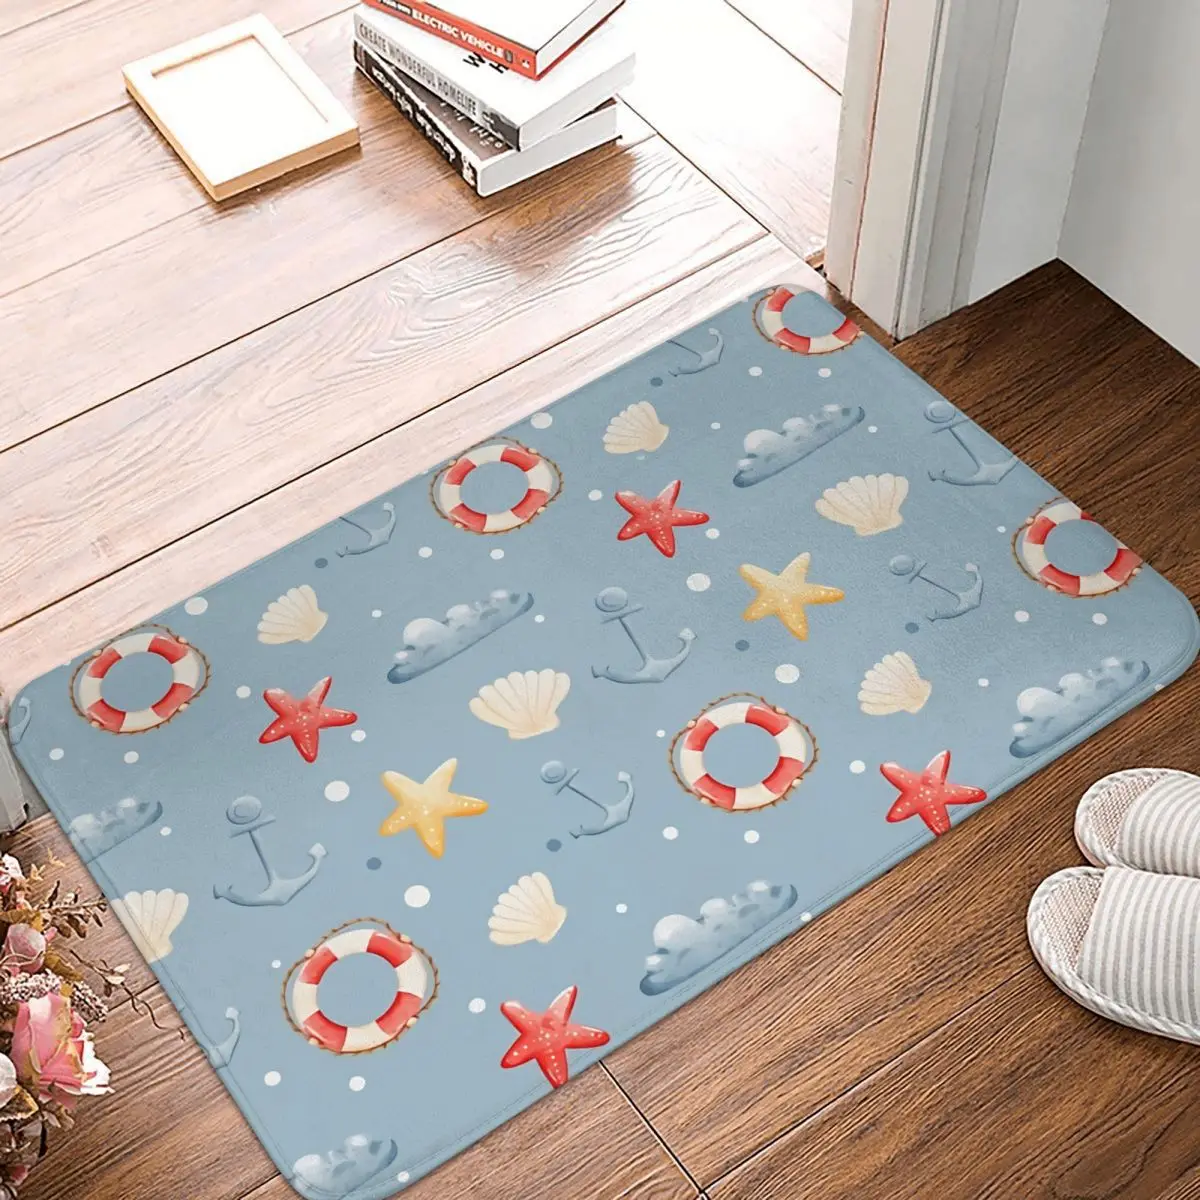 

Anchor Bath Non-Slip Carpet Ocean Blue Starfish Flannel Mat Entrance Door Doormat Home Decor Rug